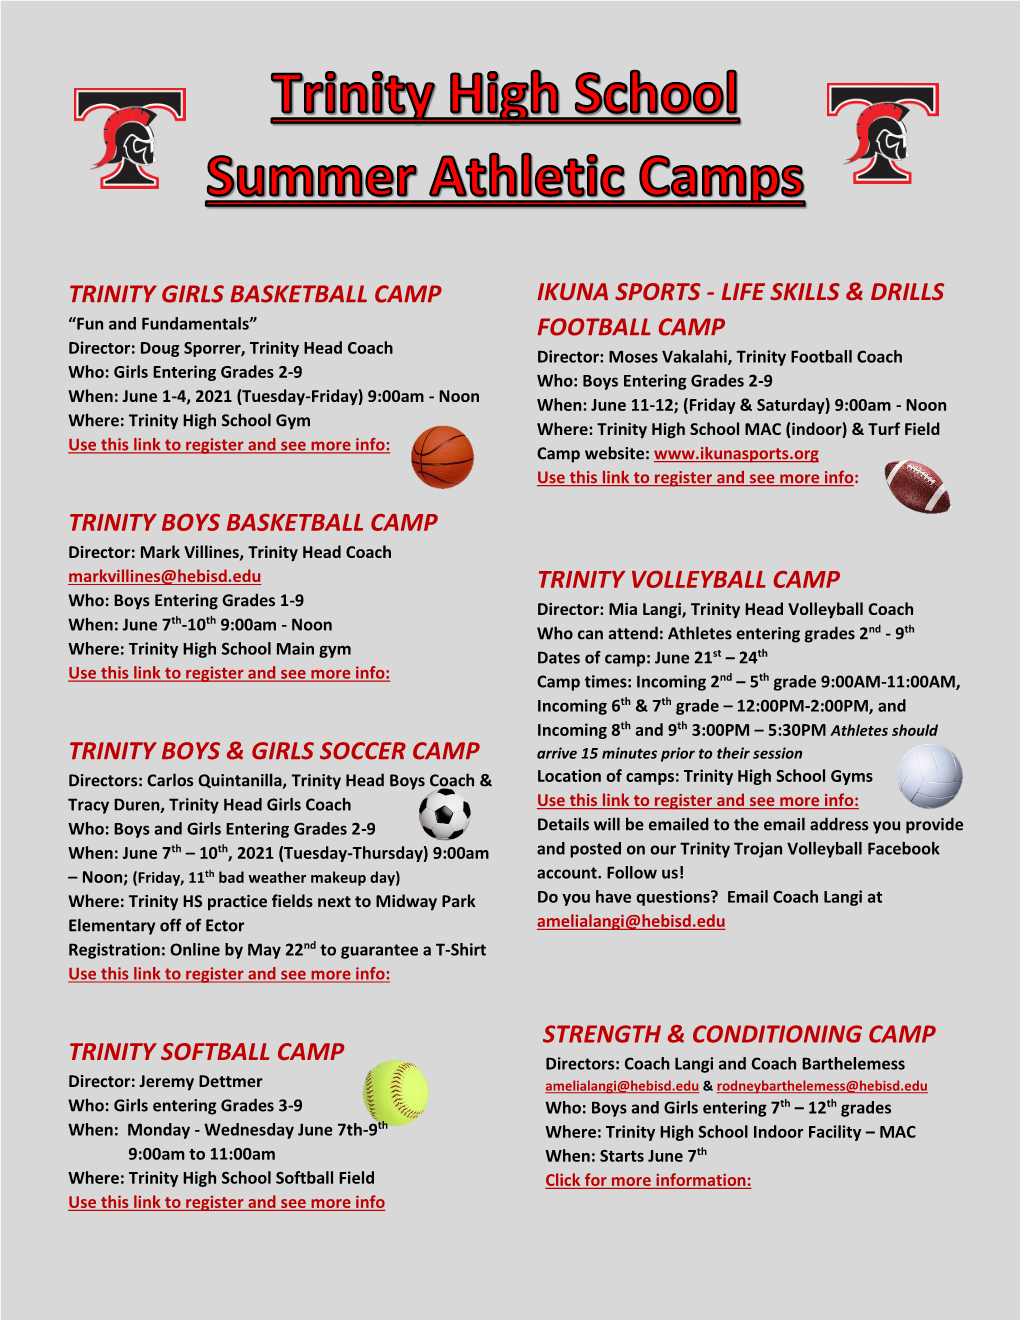 Trinity High School Summer Athletic Camps